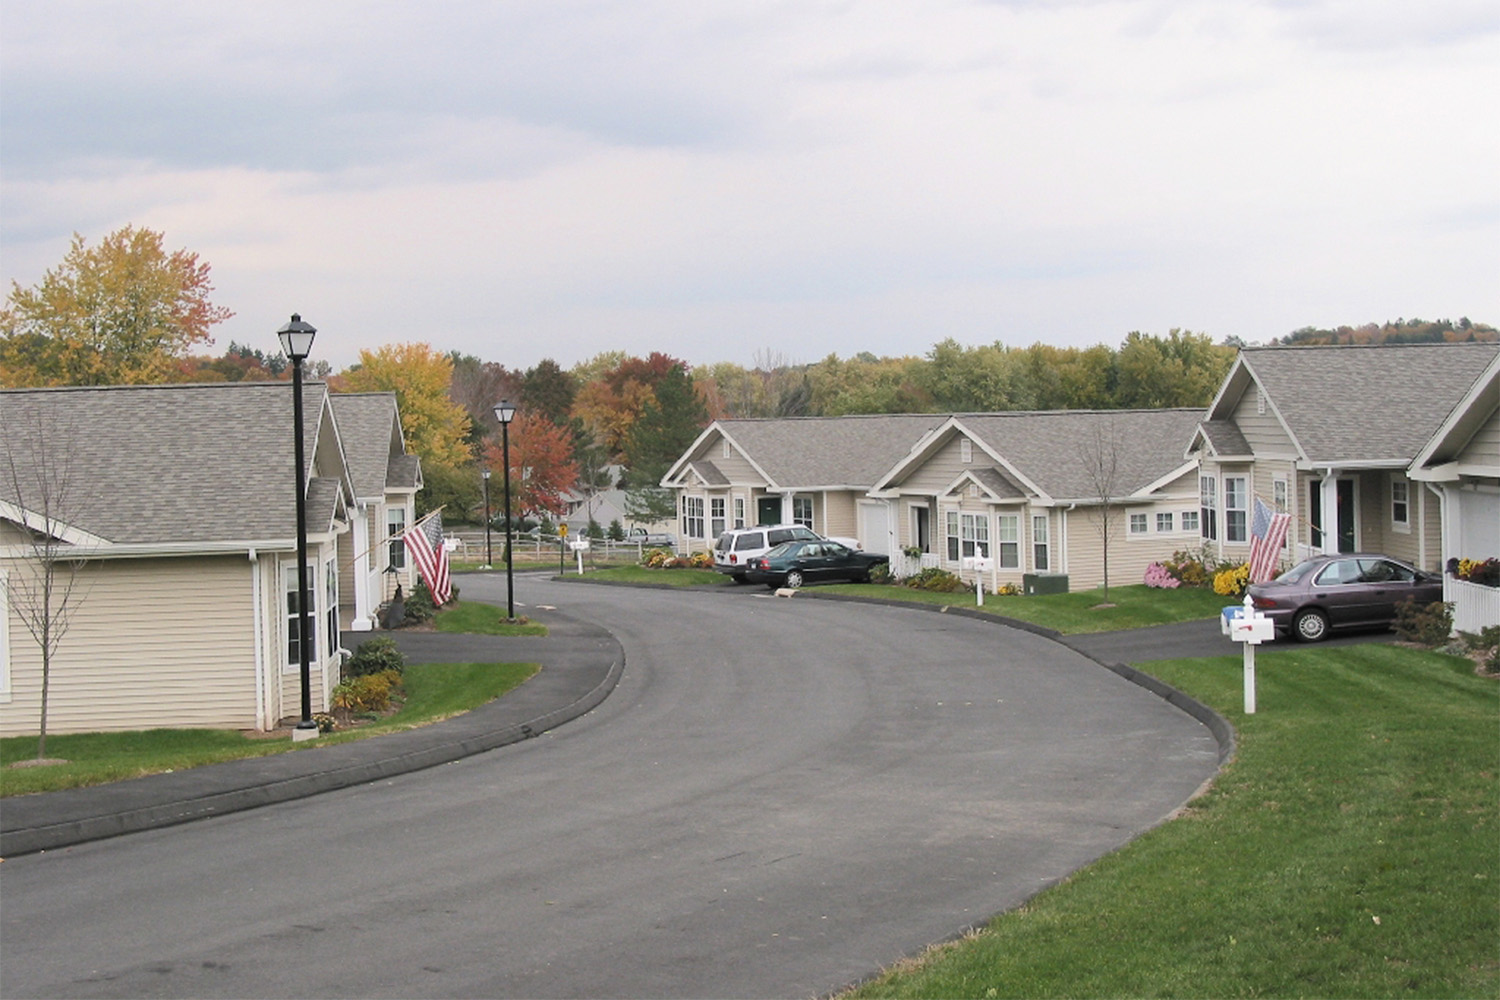 View of road between houses